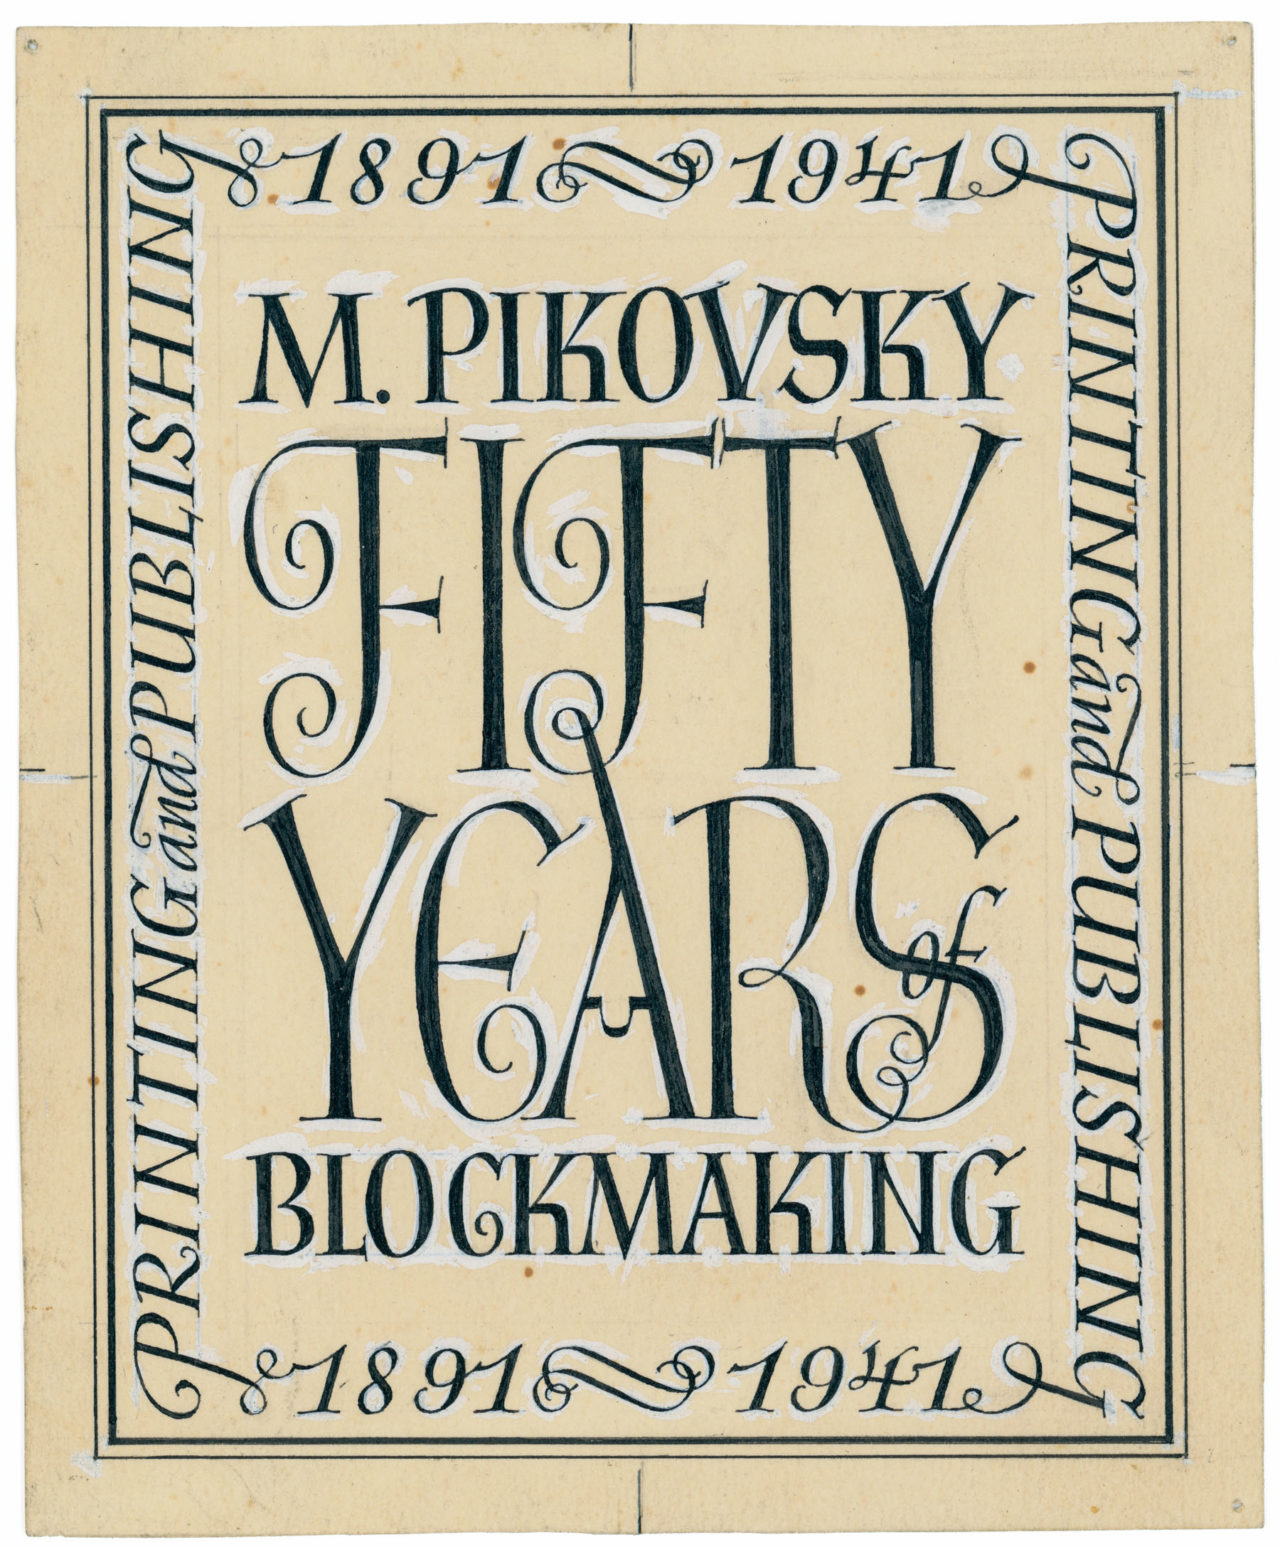 Artwork for a stamp for M. Pikovsky Ltd.